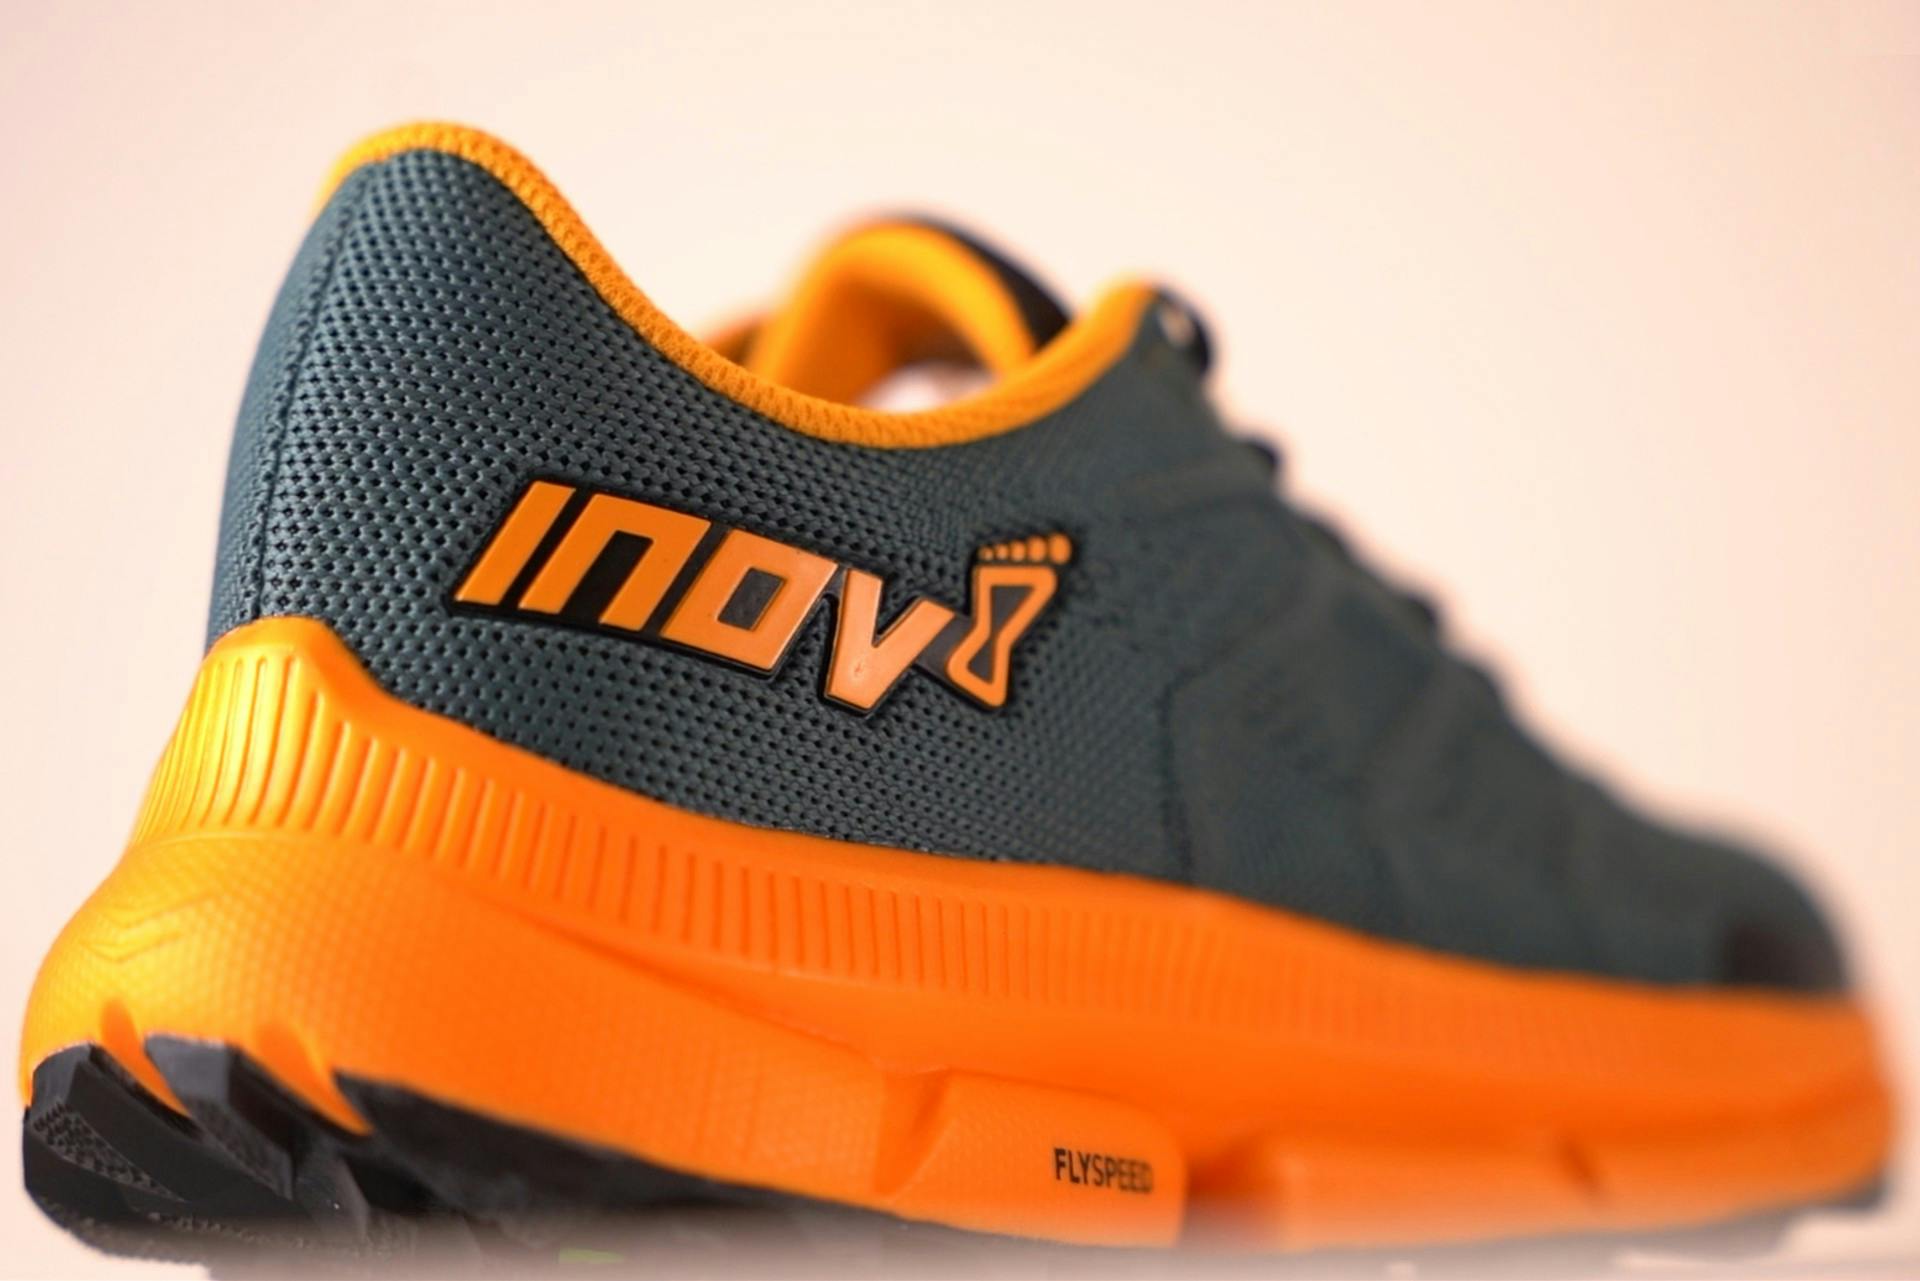 inov8-trailfly-ultra-g280-trail-running-shoes